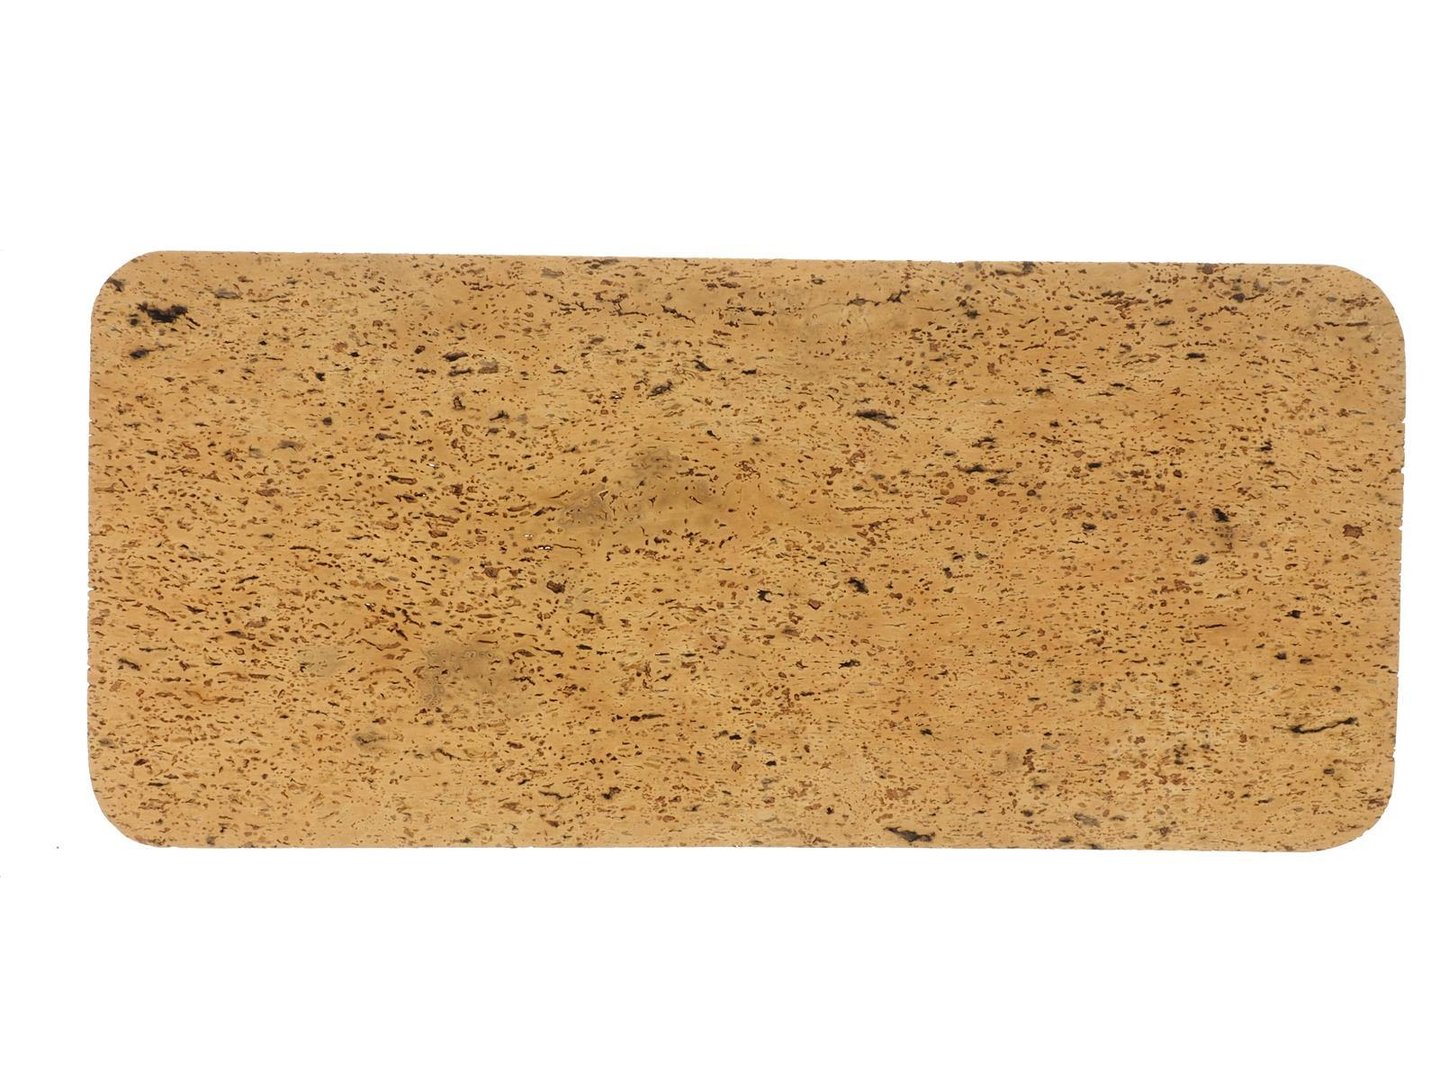 7730 14 7 Trivet Natural cork plate 2